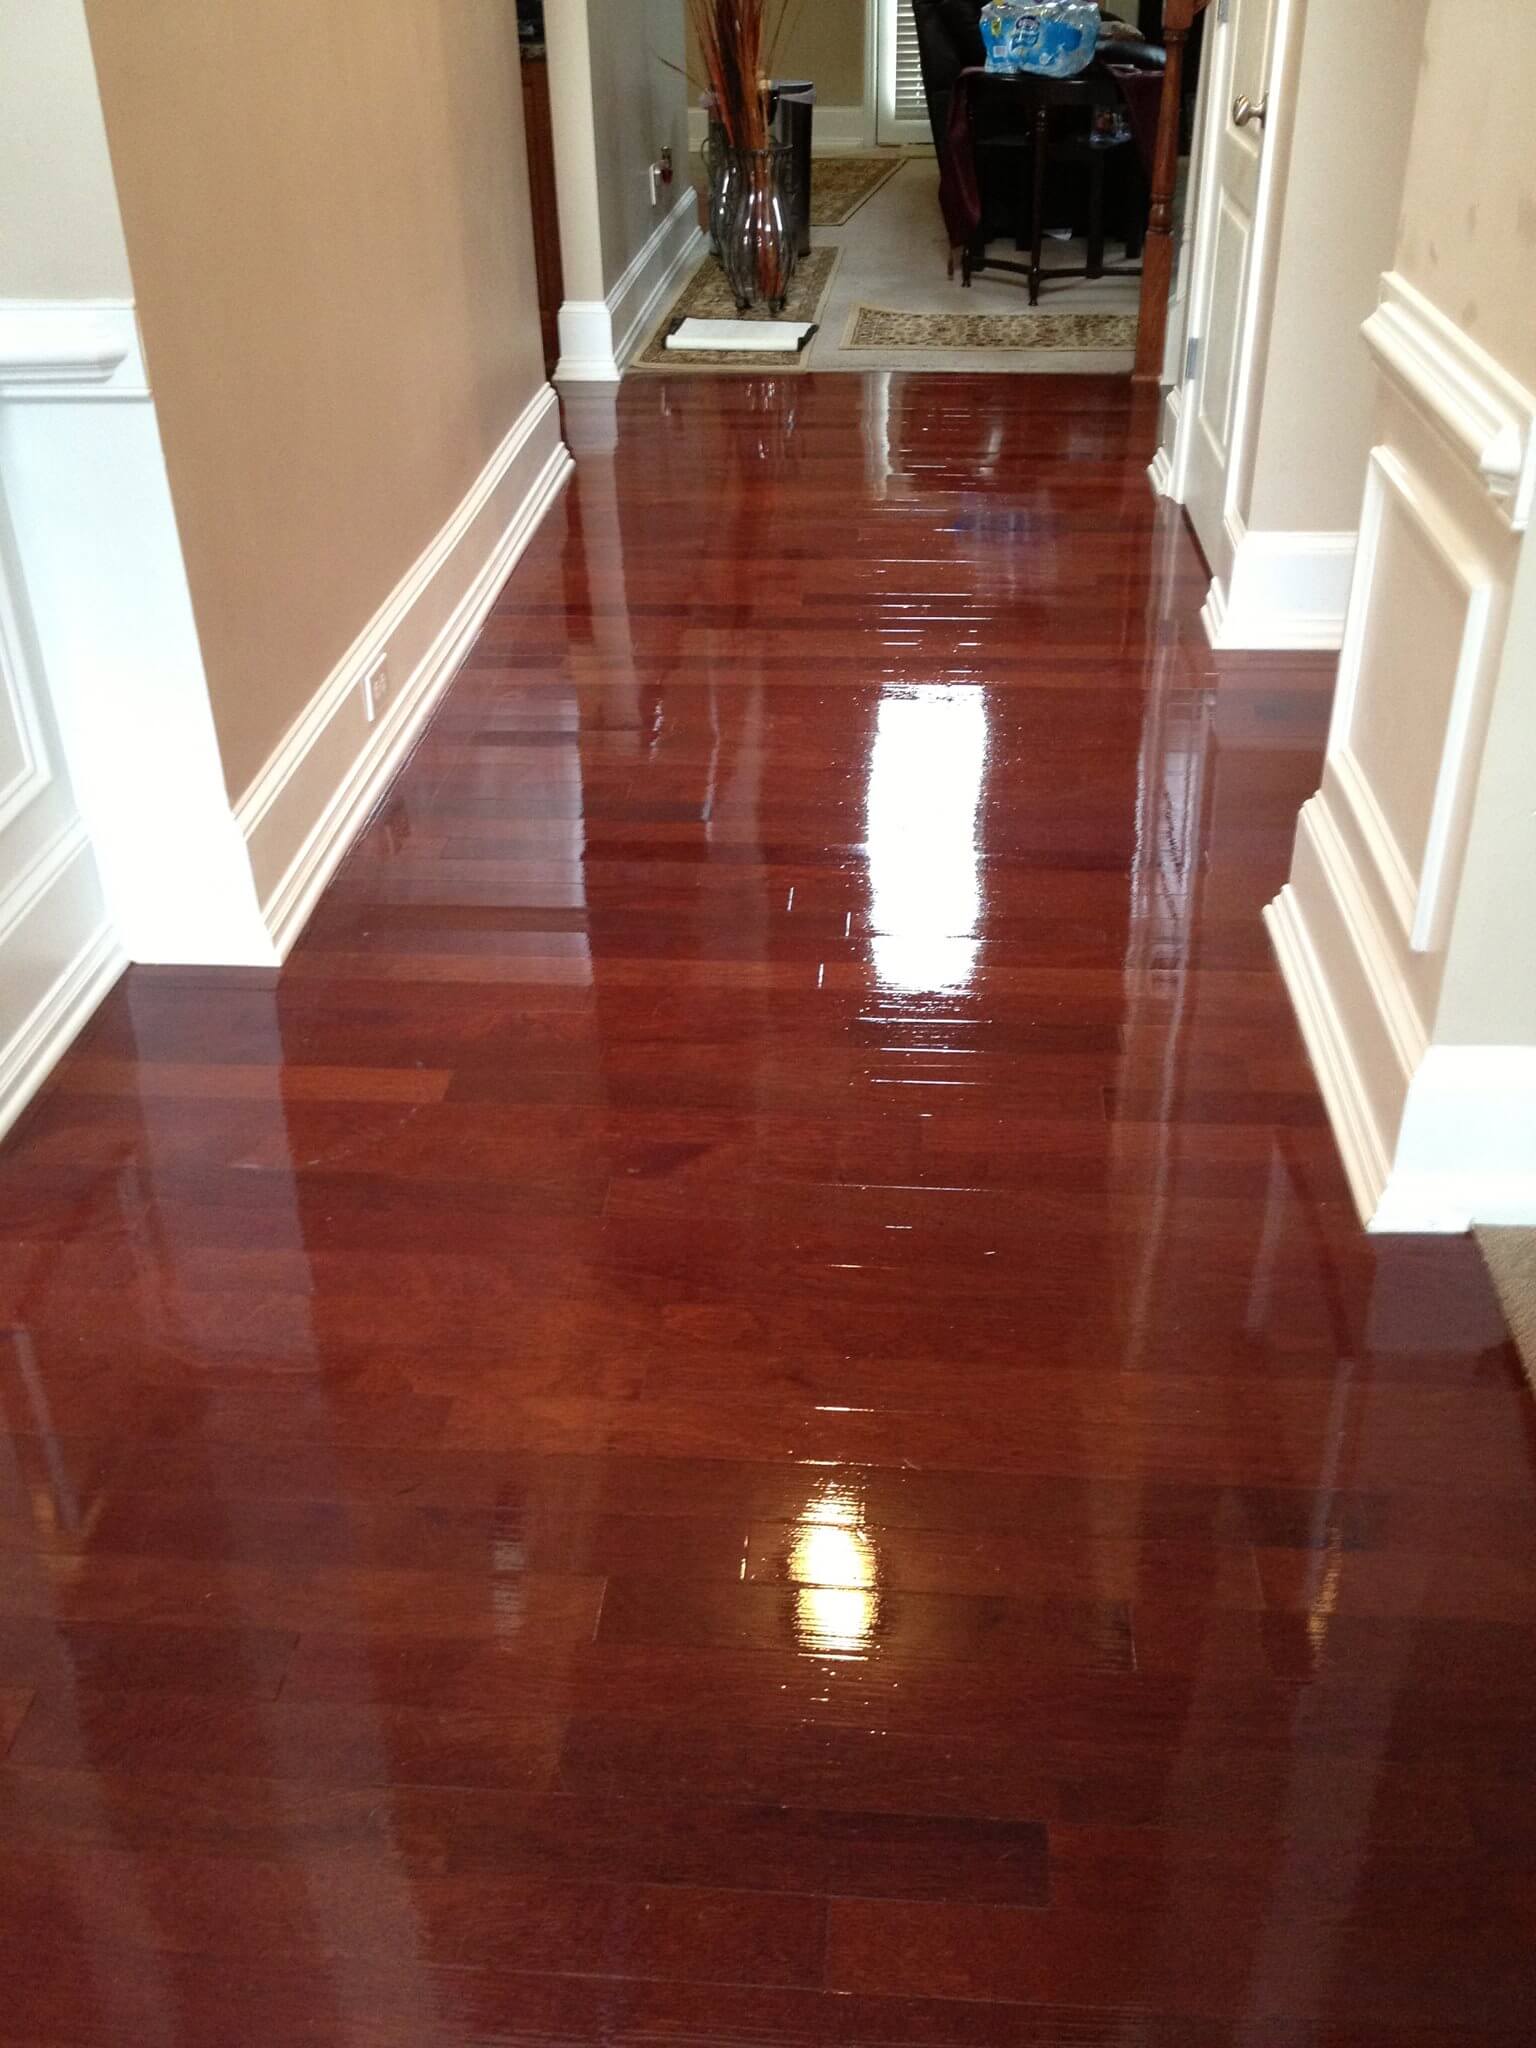 a refinished hallway floor